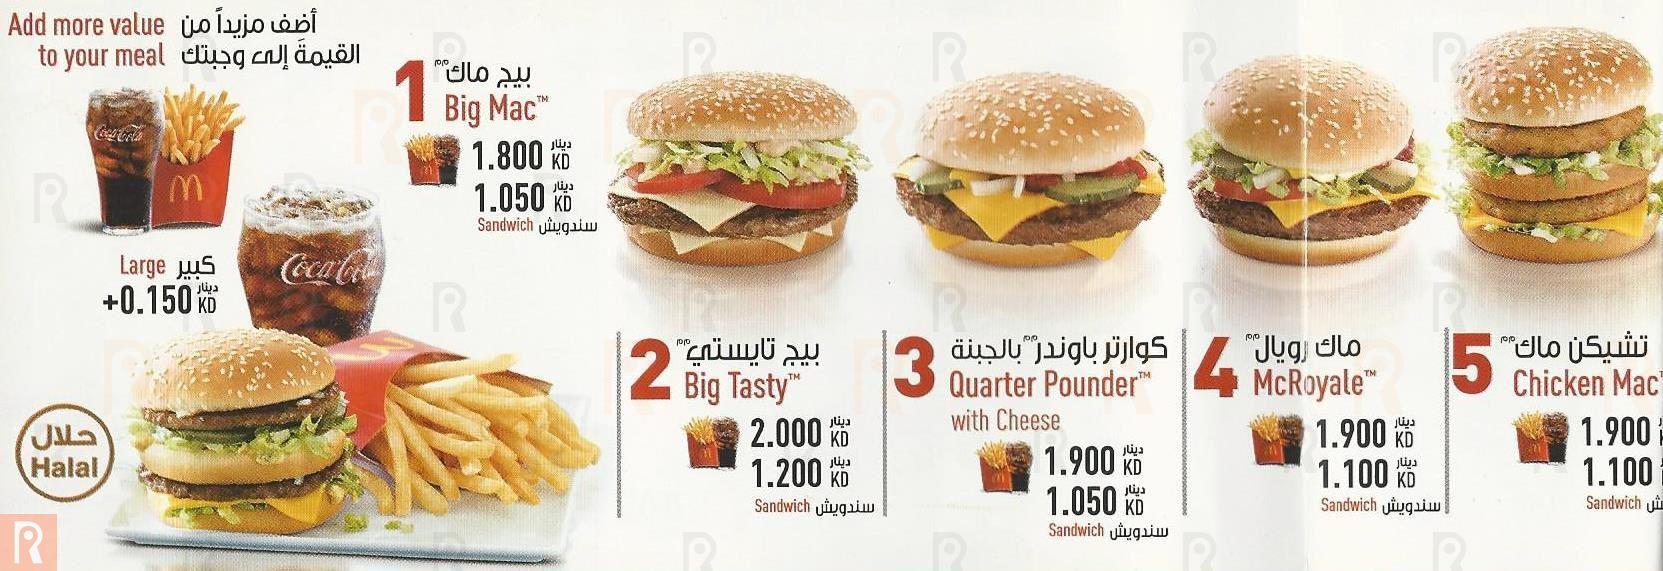 McDonald's Restaurant Menu and Meals Prices